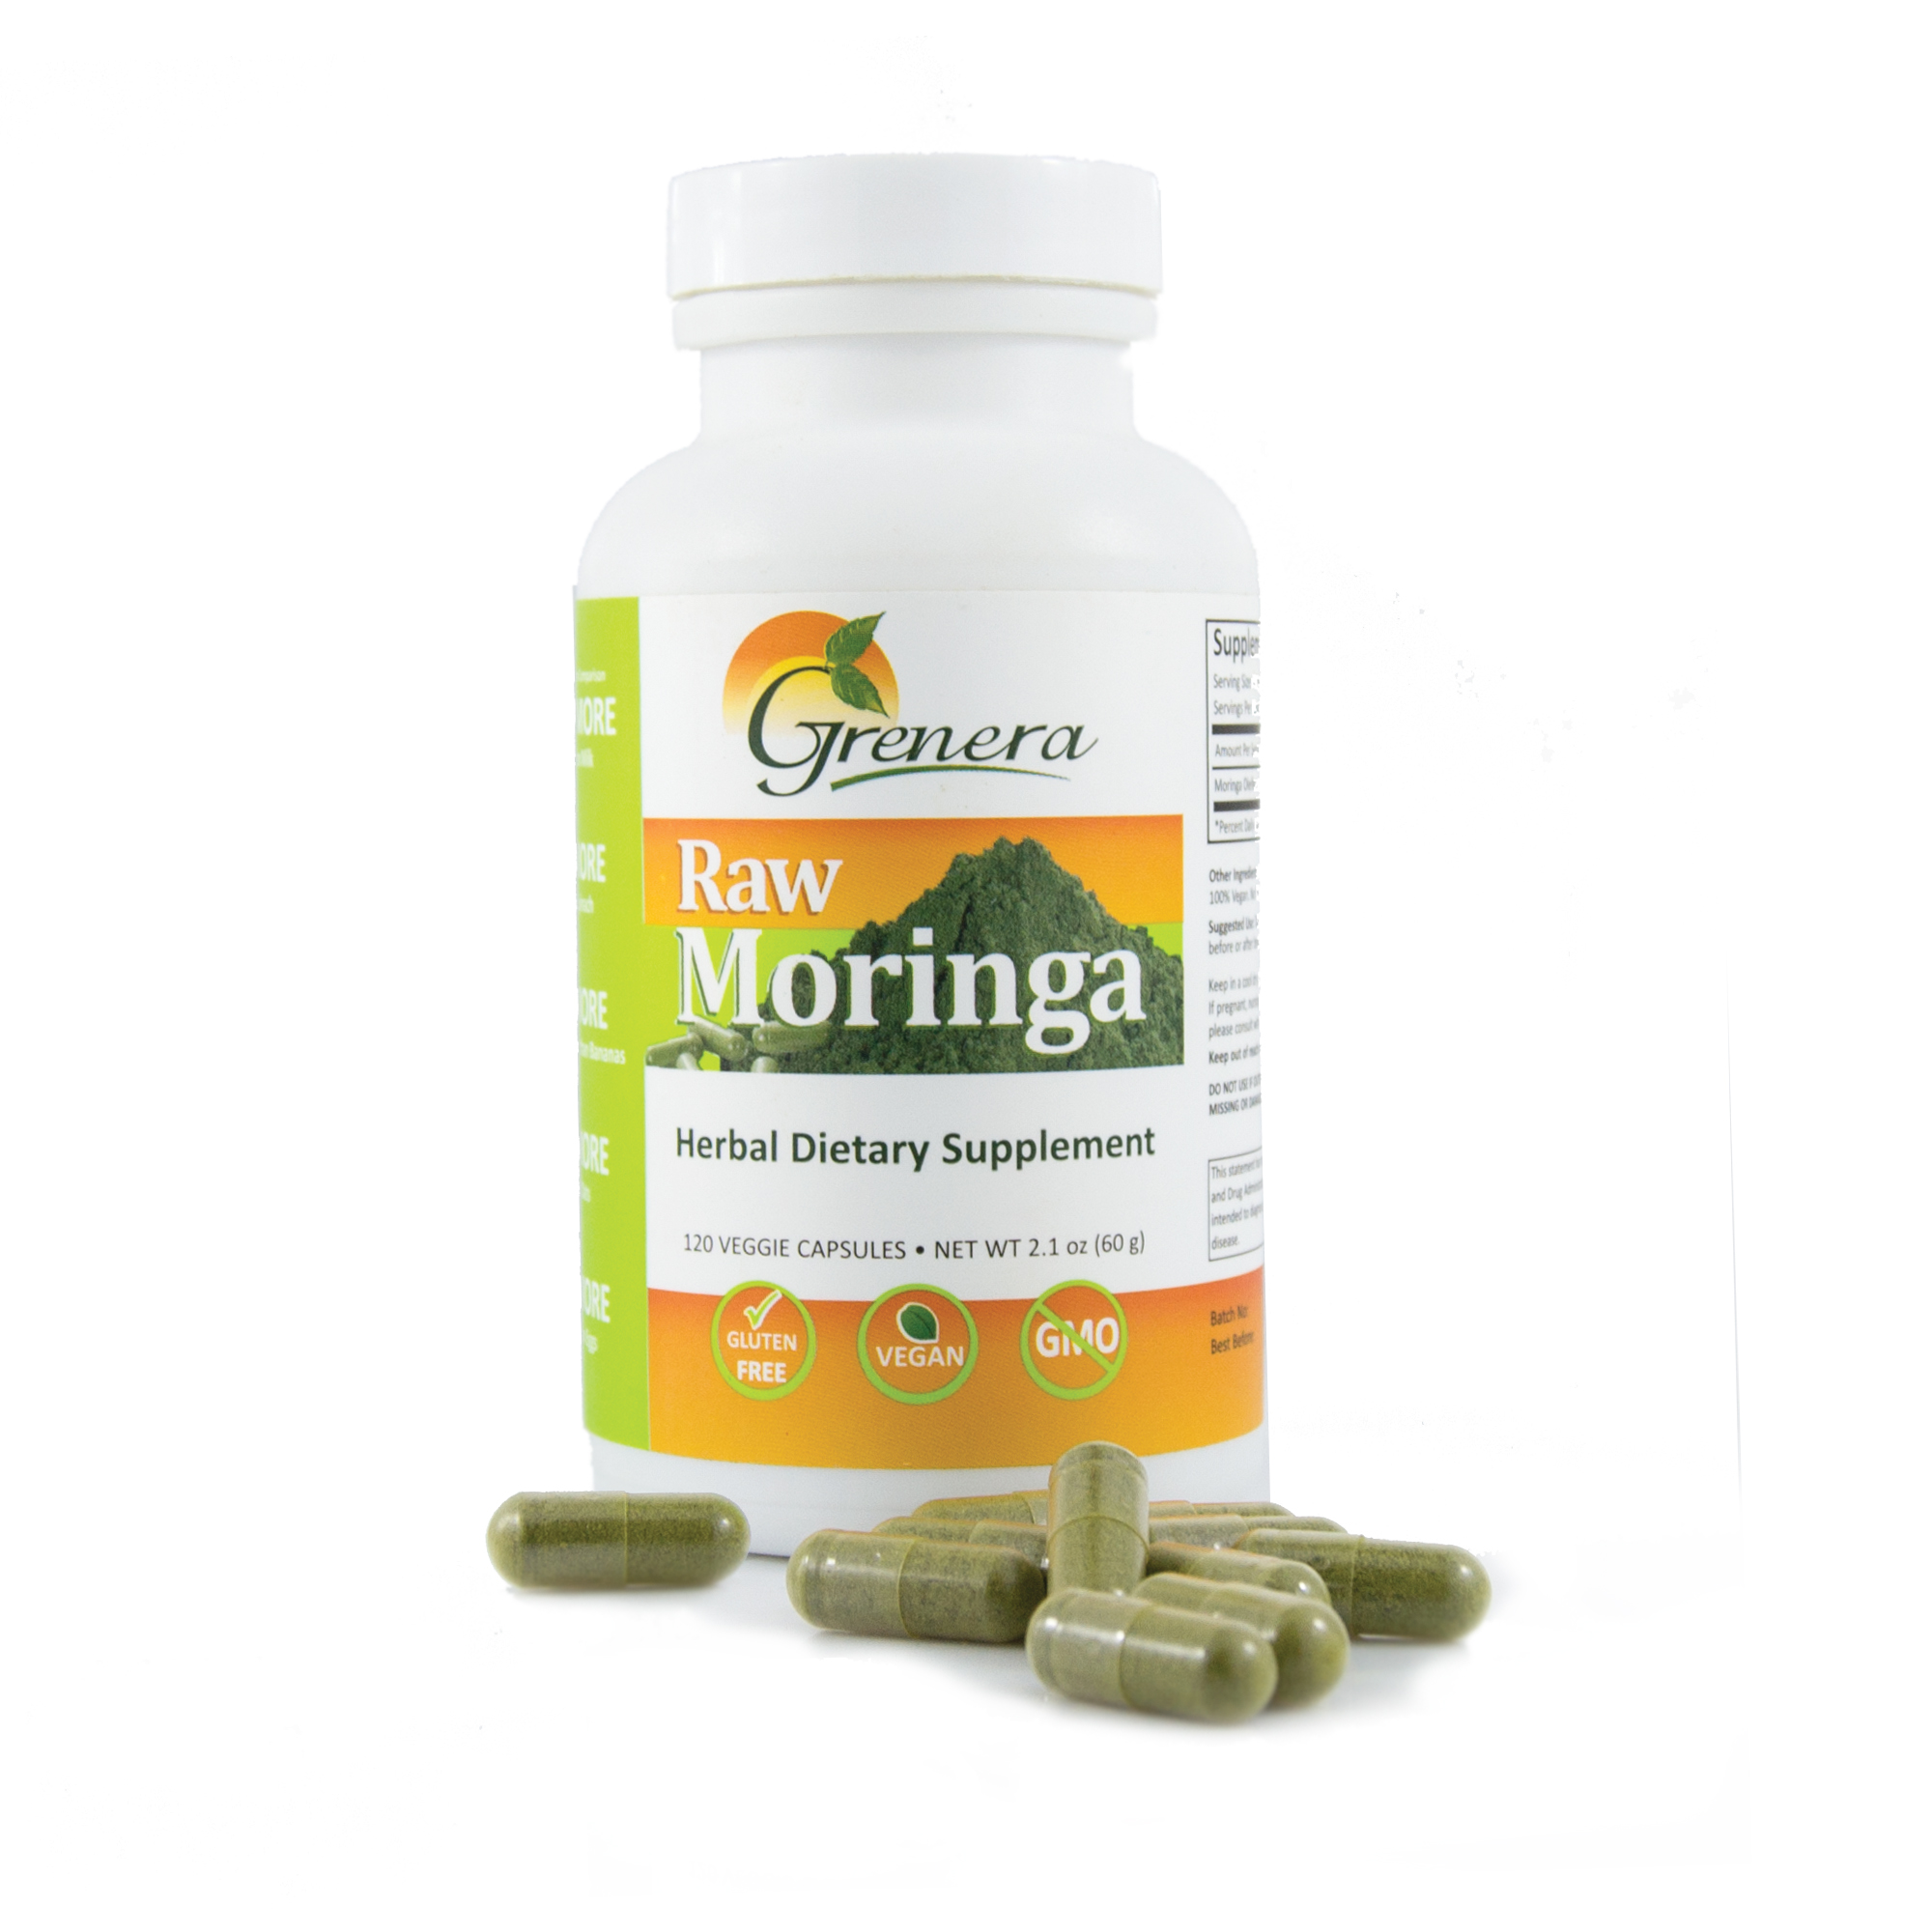 Raw Moringa Herbal Dietary Supplement Capsules (120 caps)